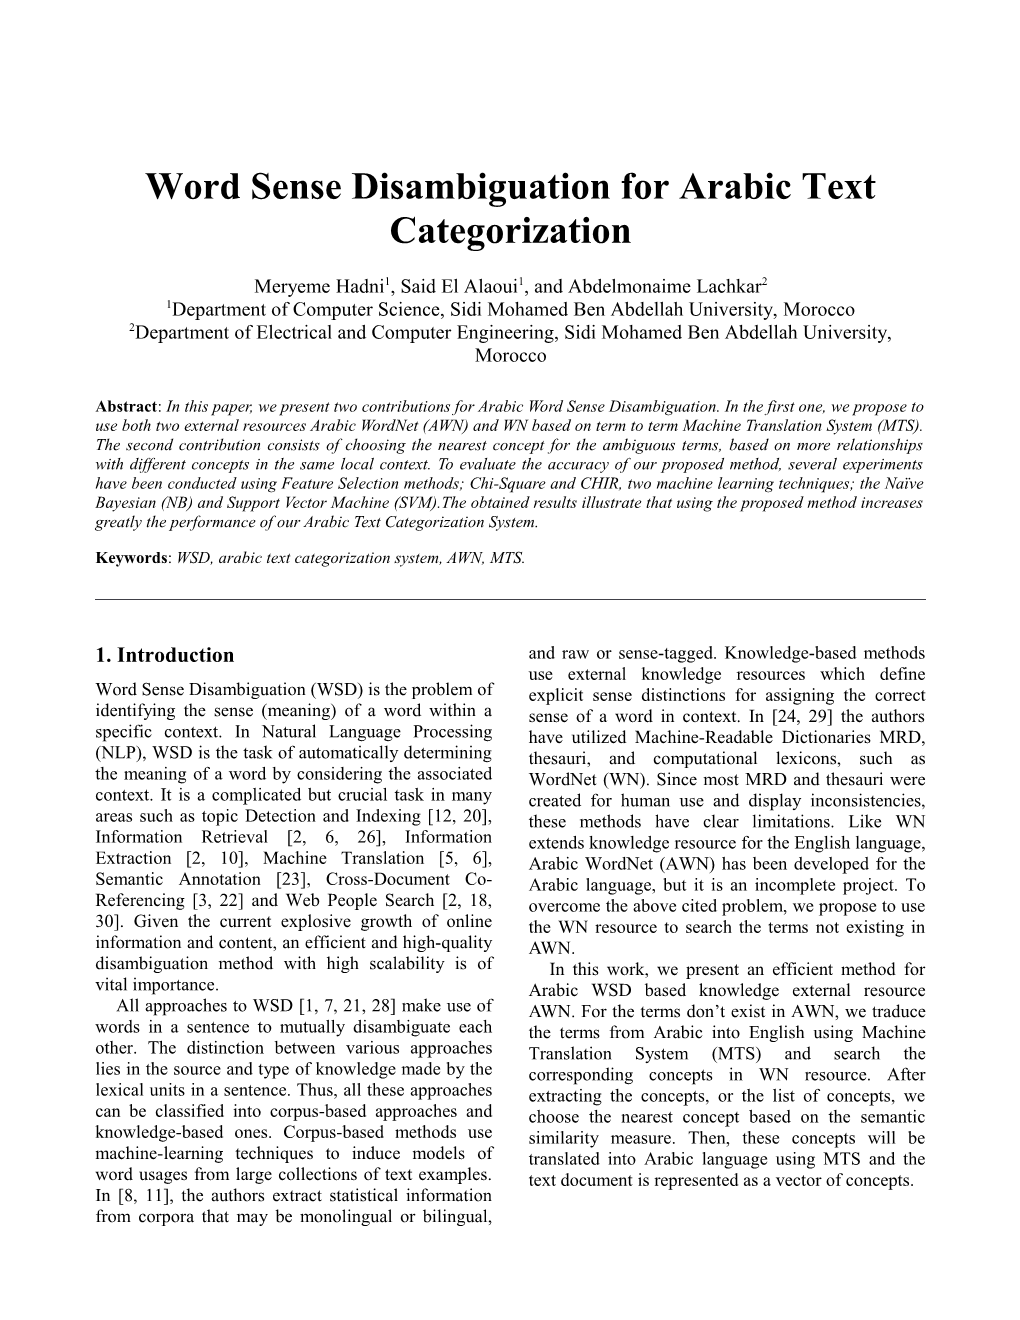 Word Sense Disambiguation for Arabic Text Categorization